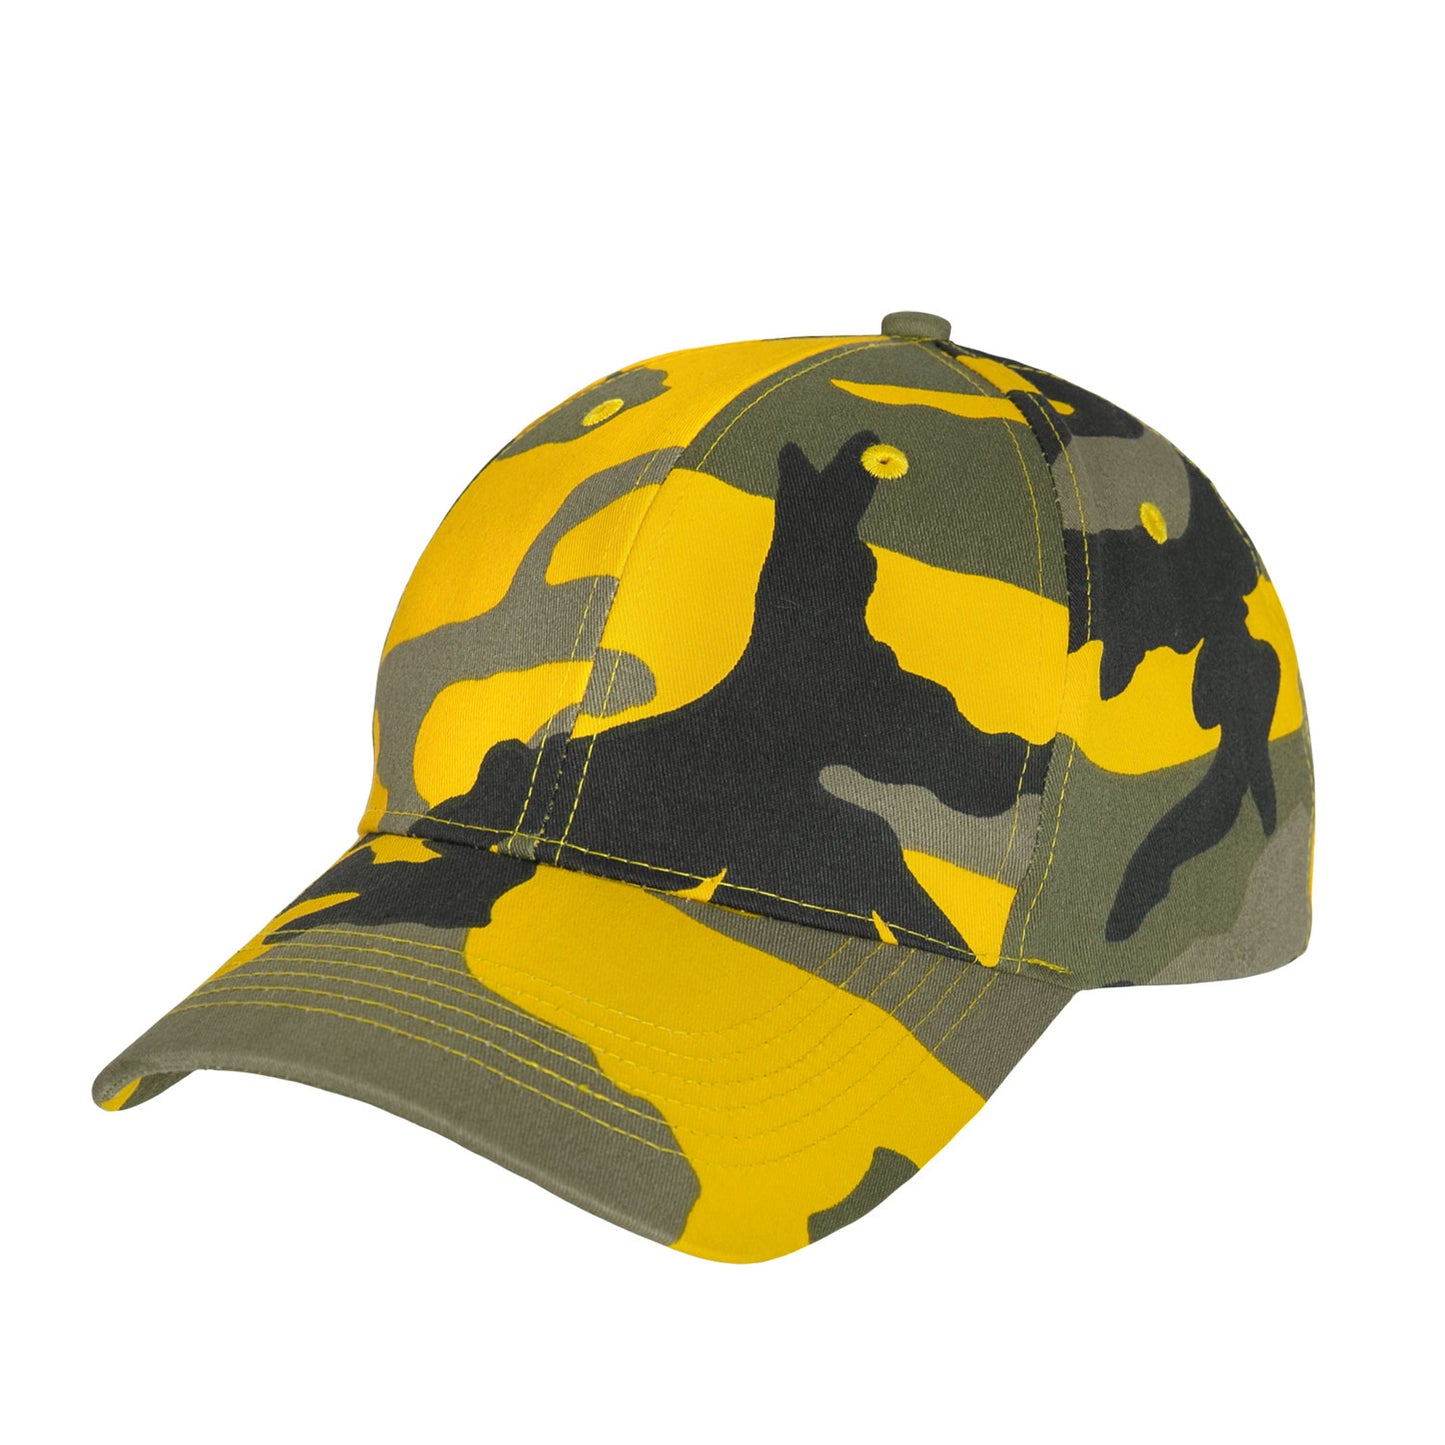 Stinger Yellow Camo Adjustable Baseball Hat - Rothco Color Camo Mid-Low Pro Cap